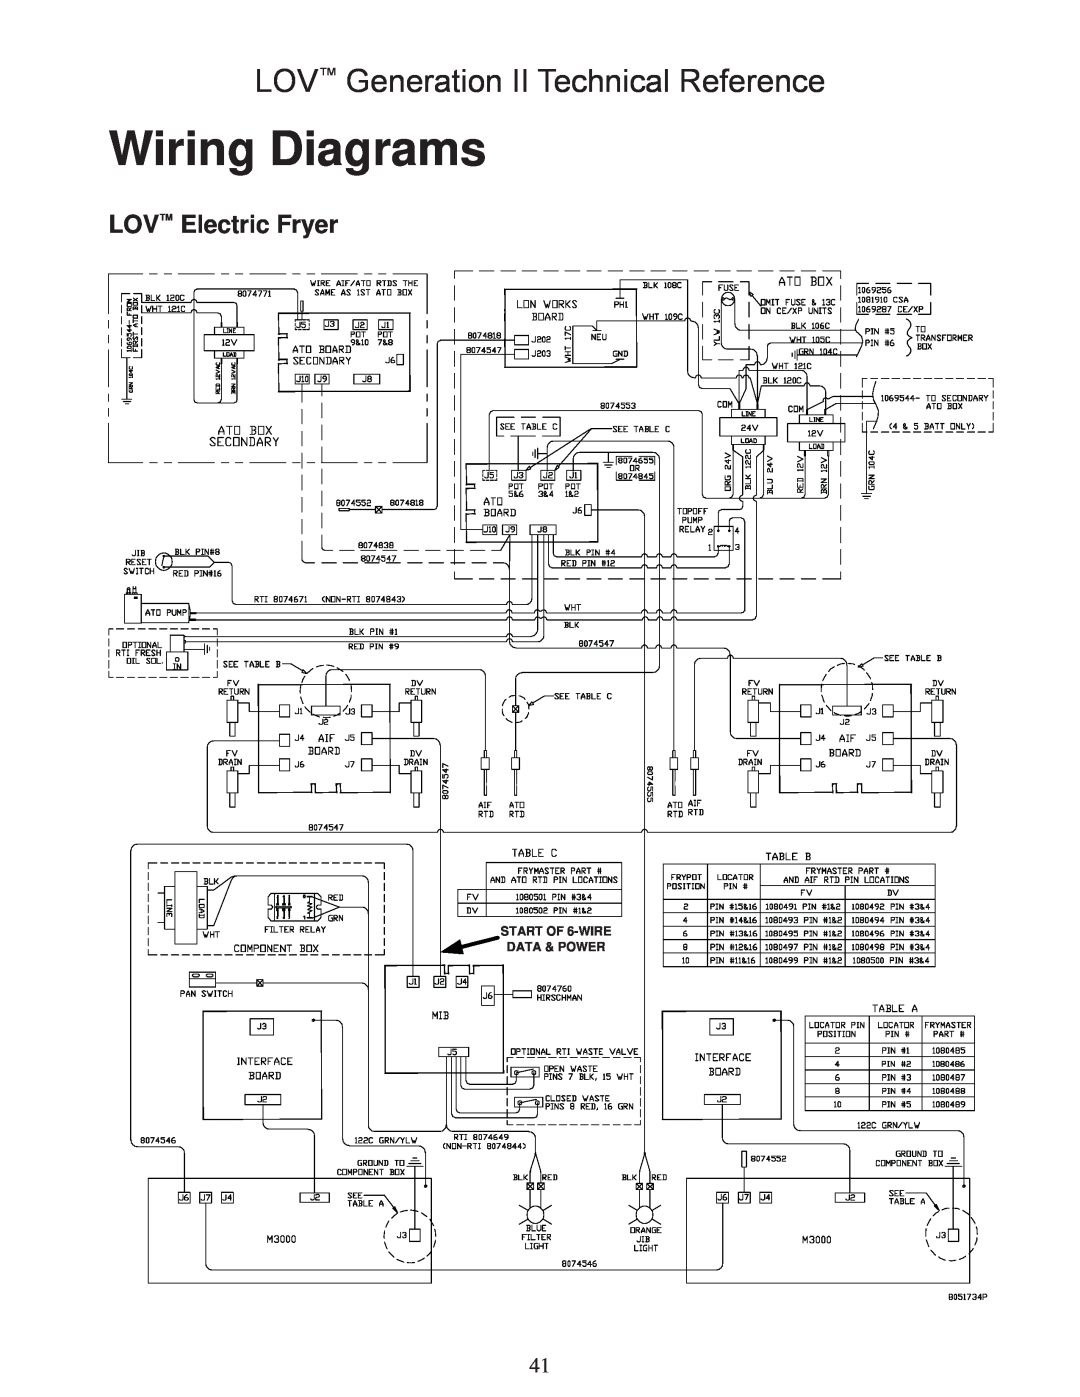 Frymaster M3000 manual Wiring Diagrams, LOV Electric Fryer, LOV Generation II Technical Reference 